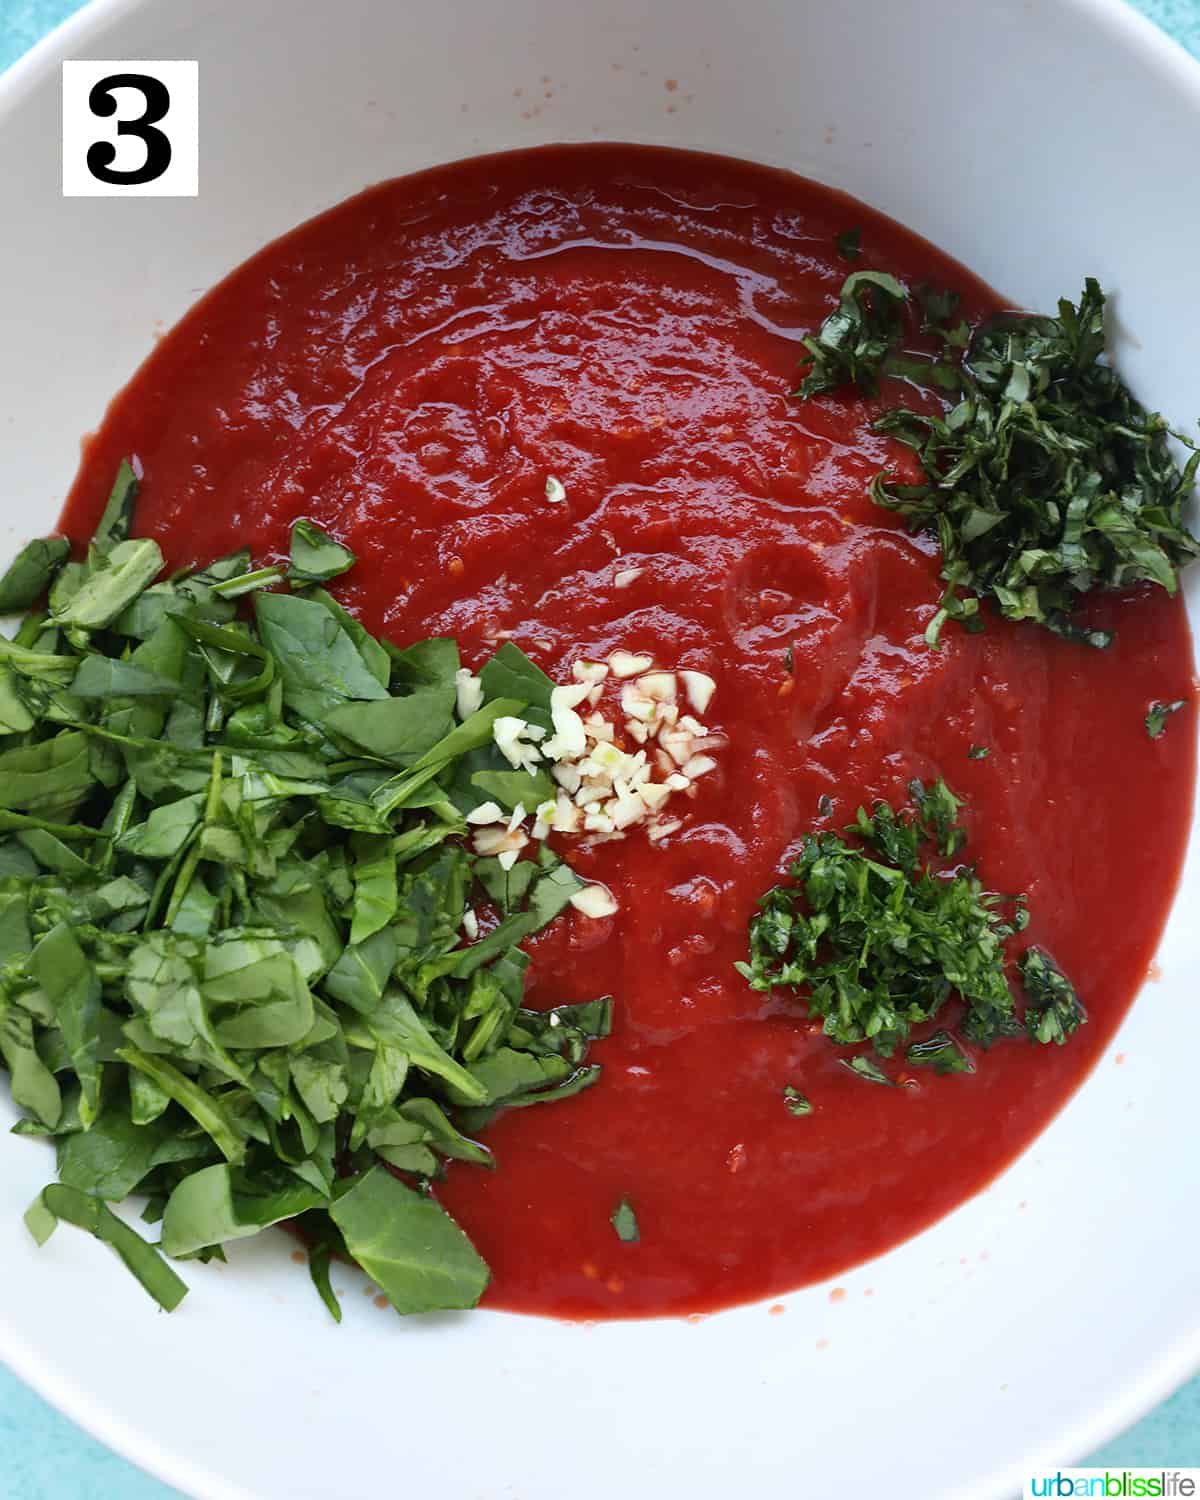 white bowl with tomato sauce, garlic, and herbs to make a marinara sauce.